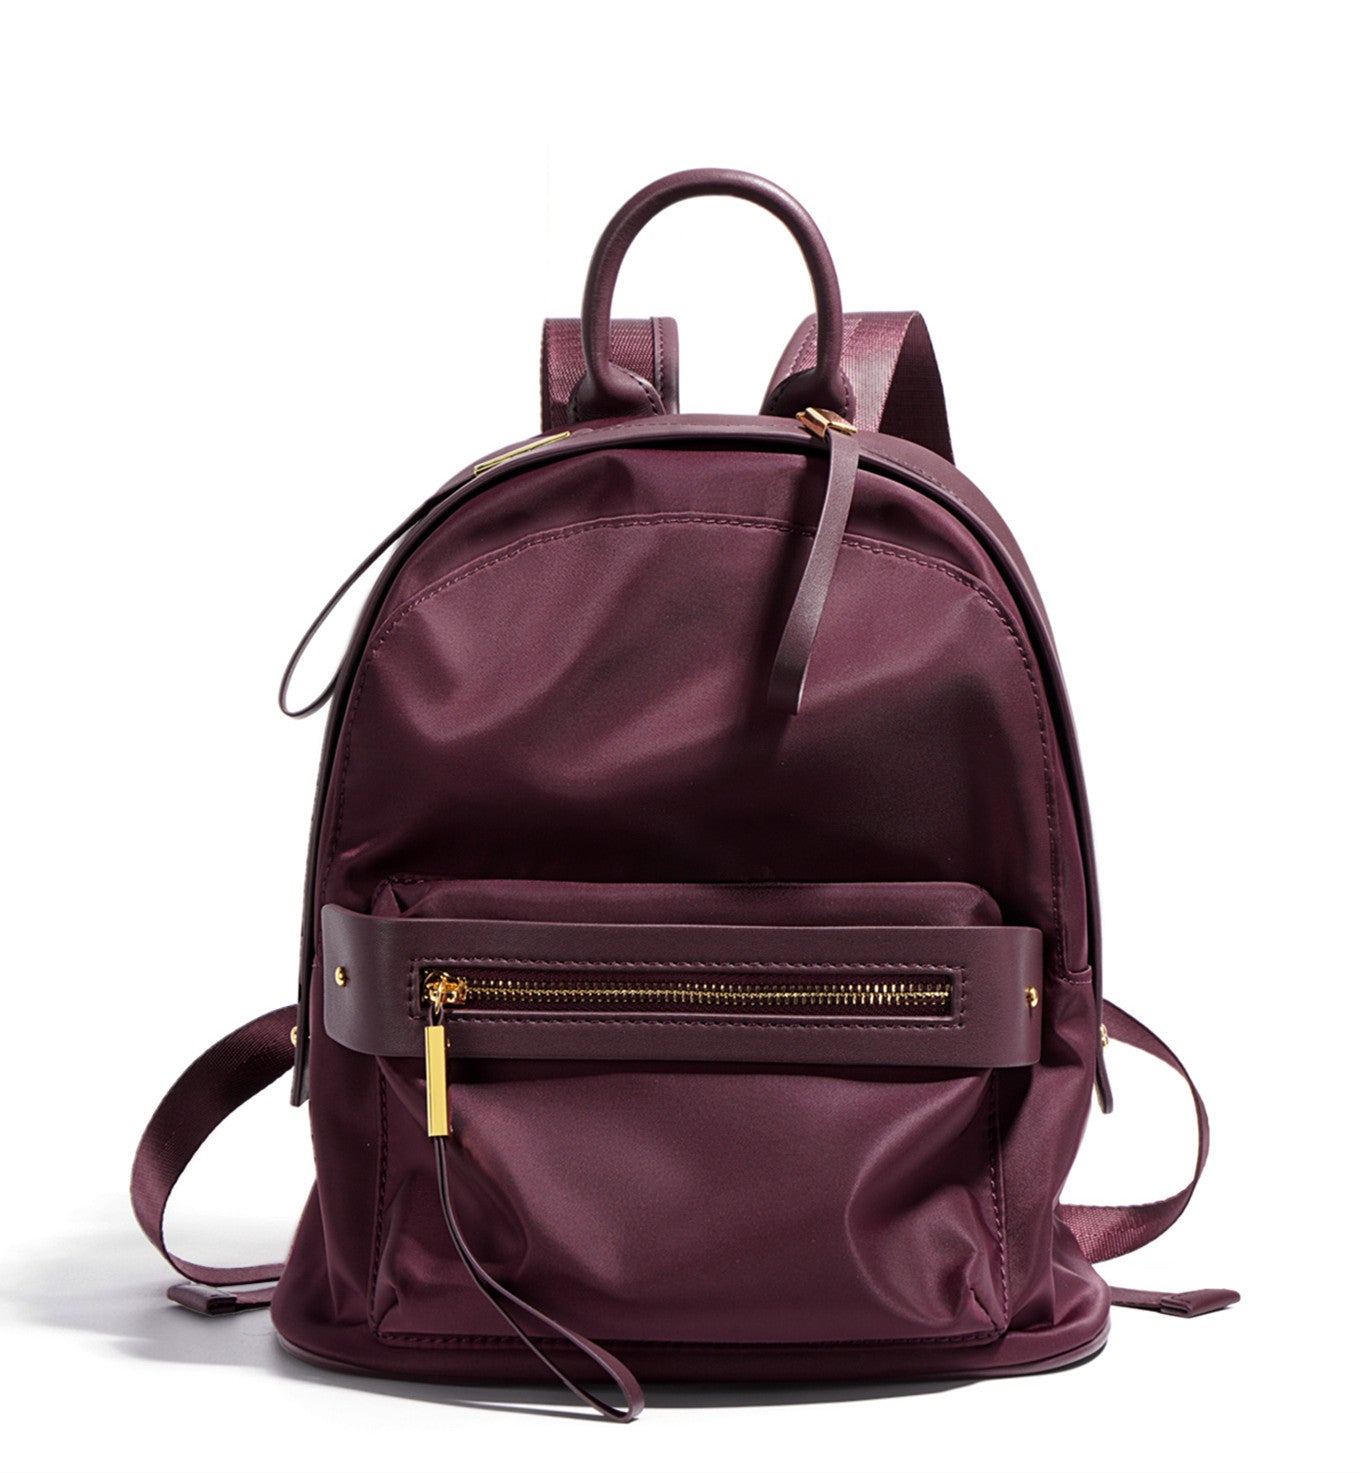 Stylish Women’s Nylon Leather Backpack for Travel